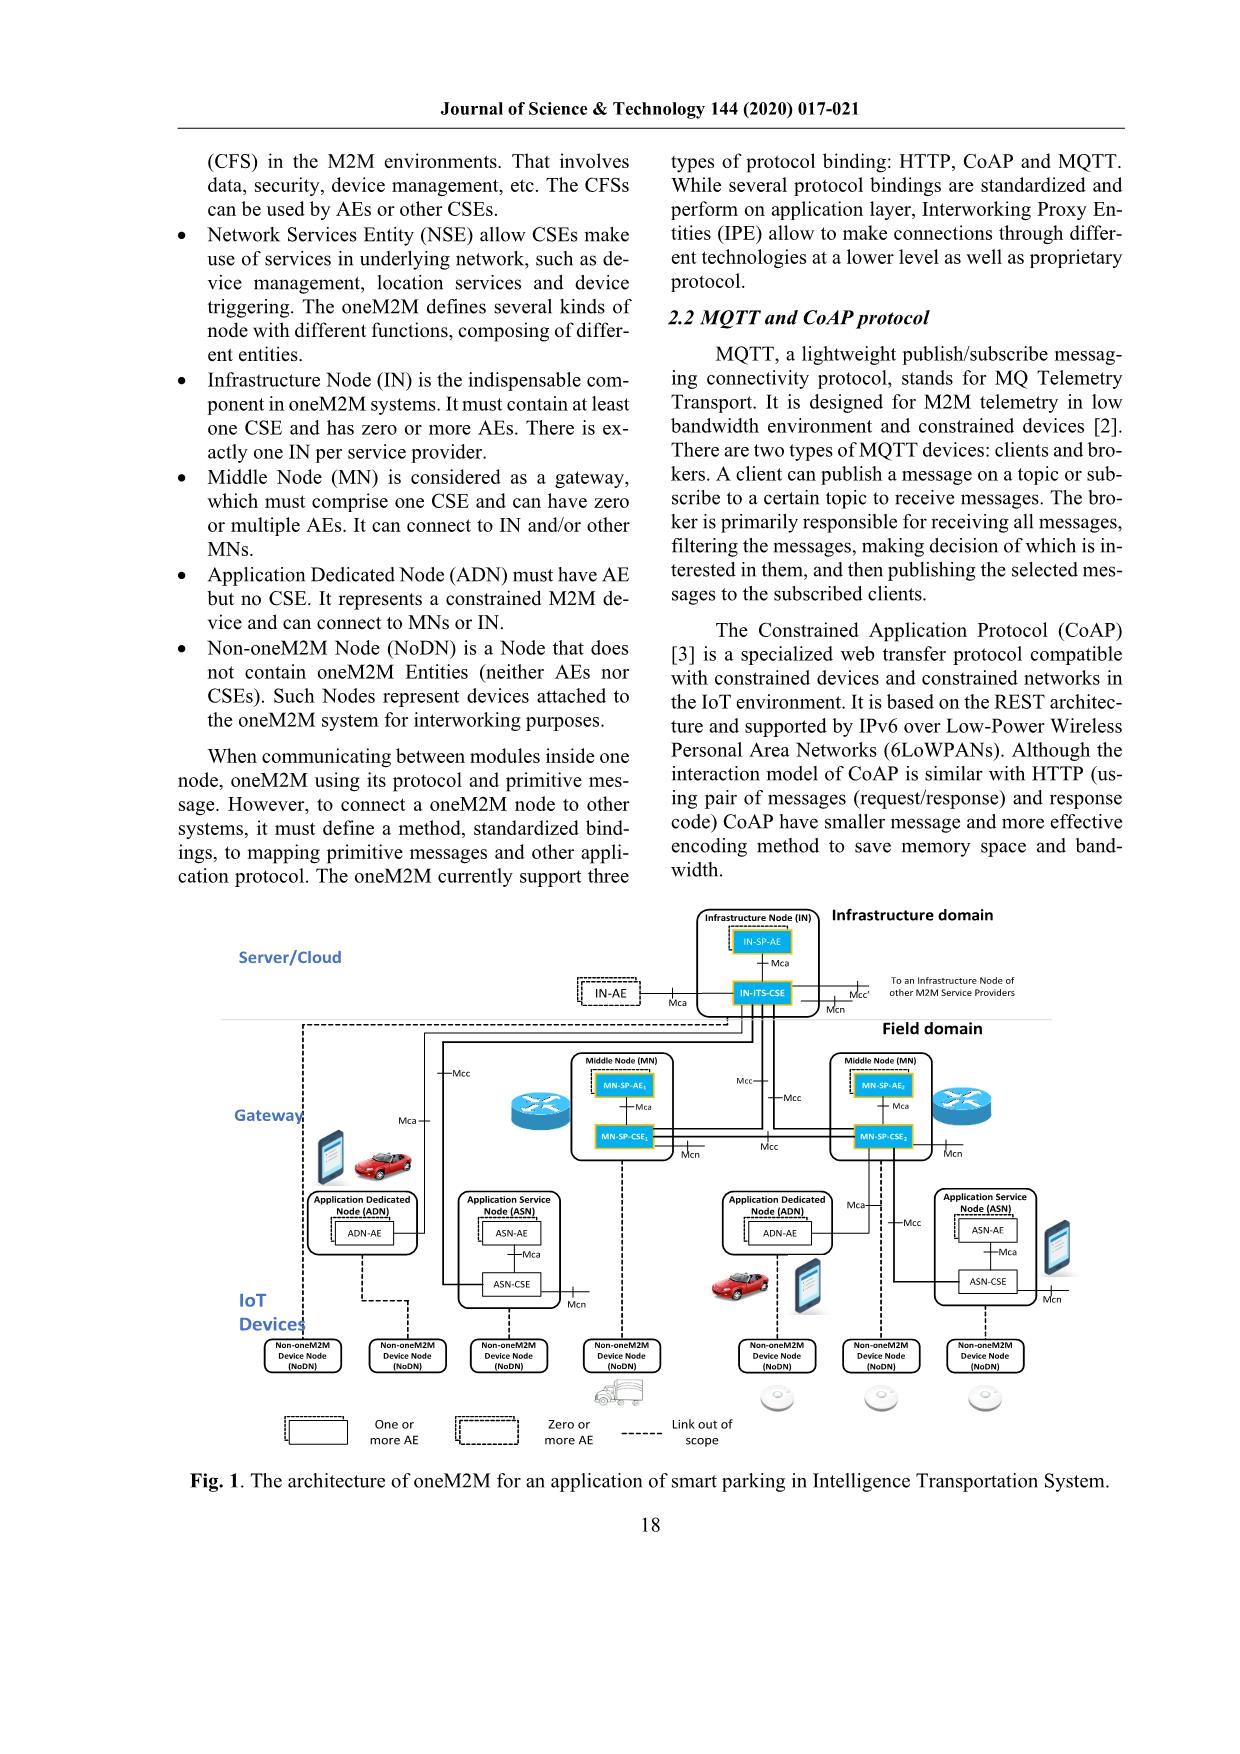 Service Platform for Integration of various M2M/IoT system trang 2